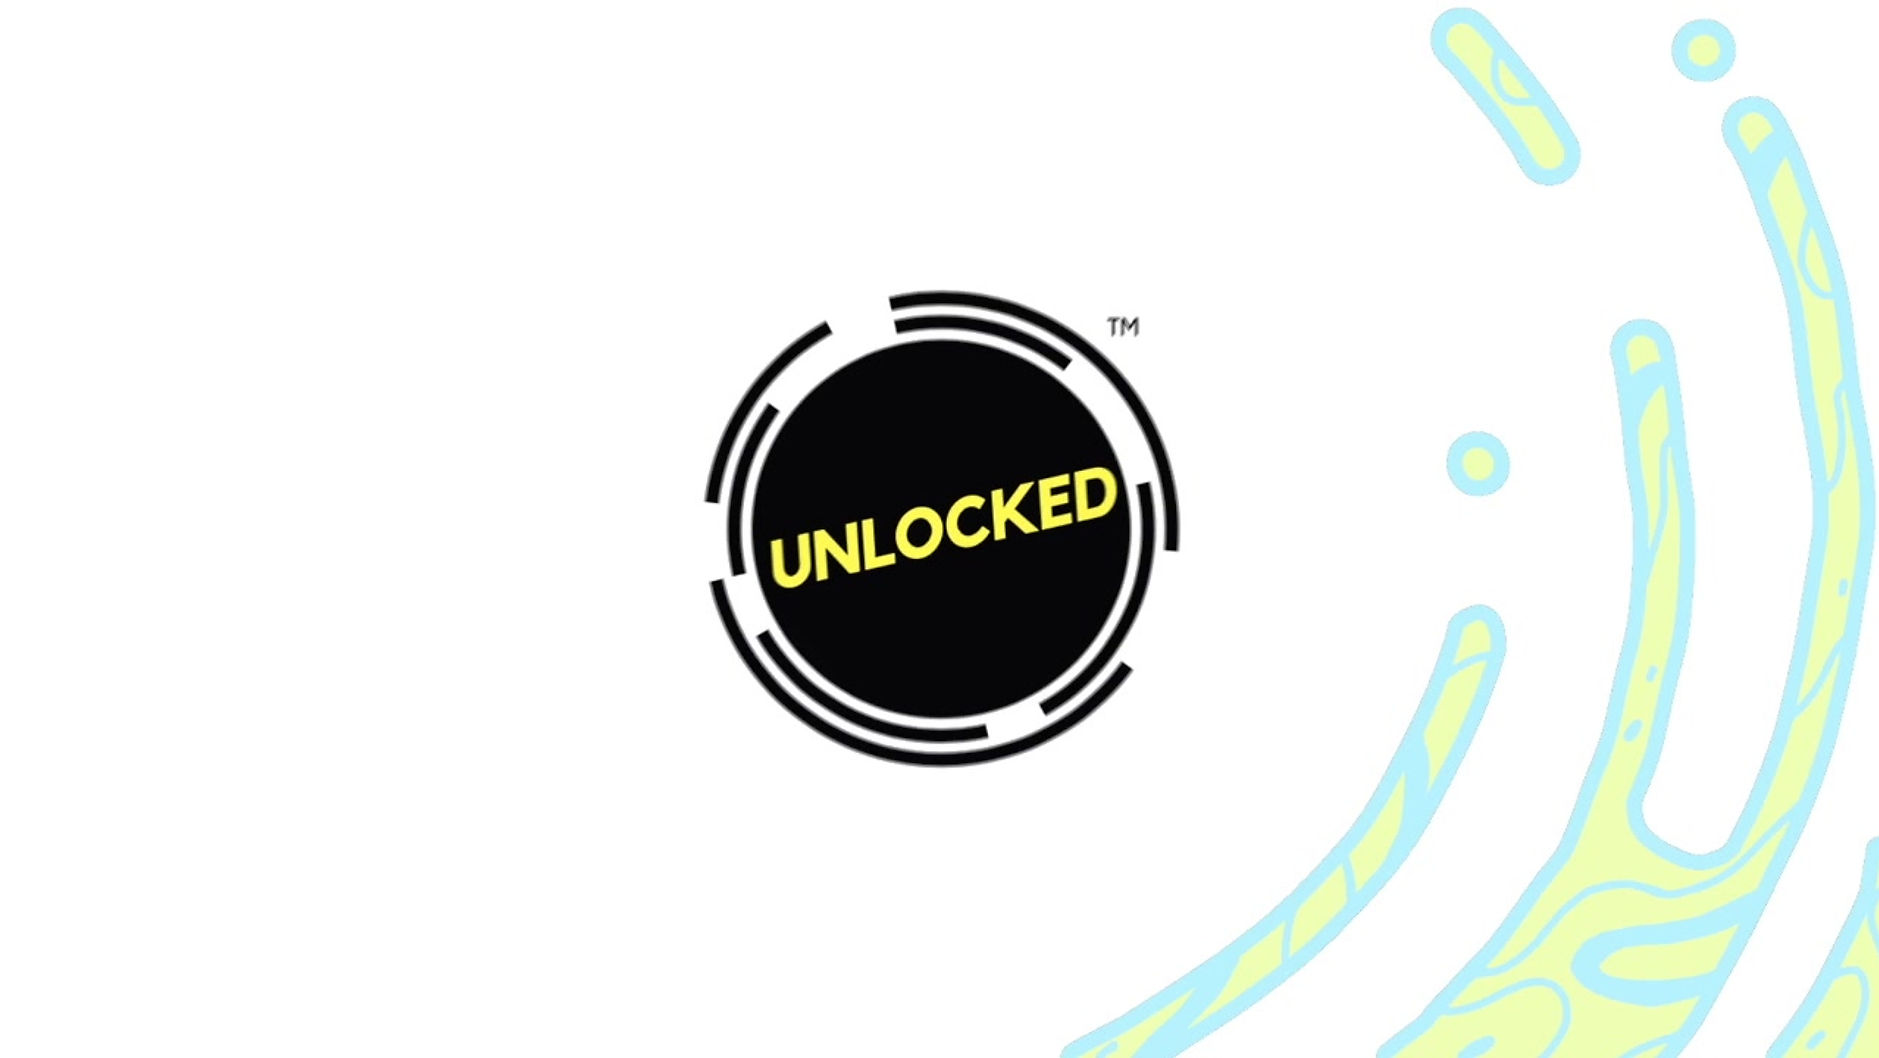 Unlocked intro